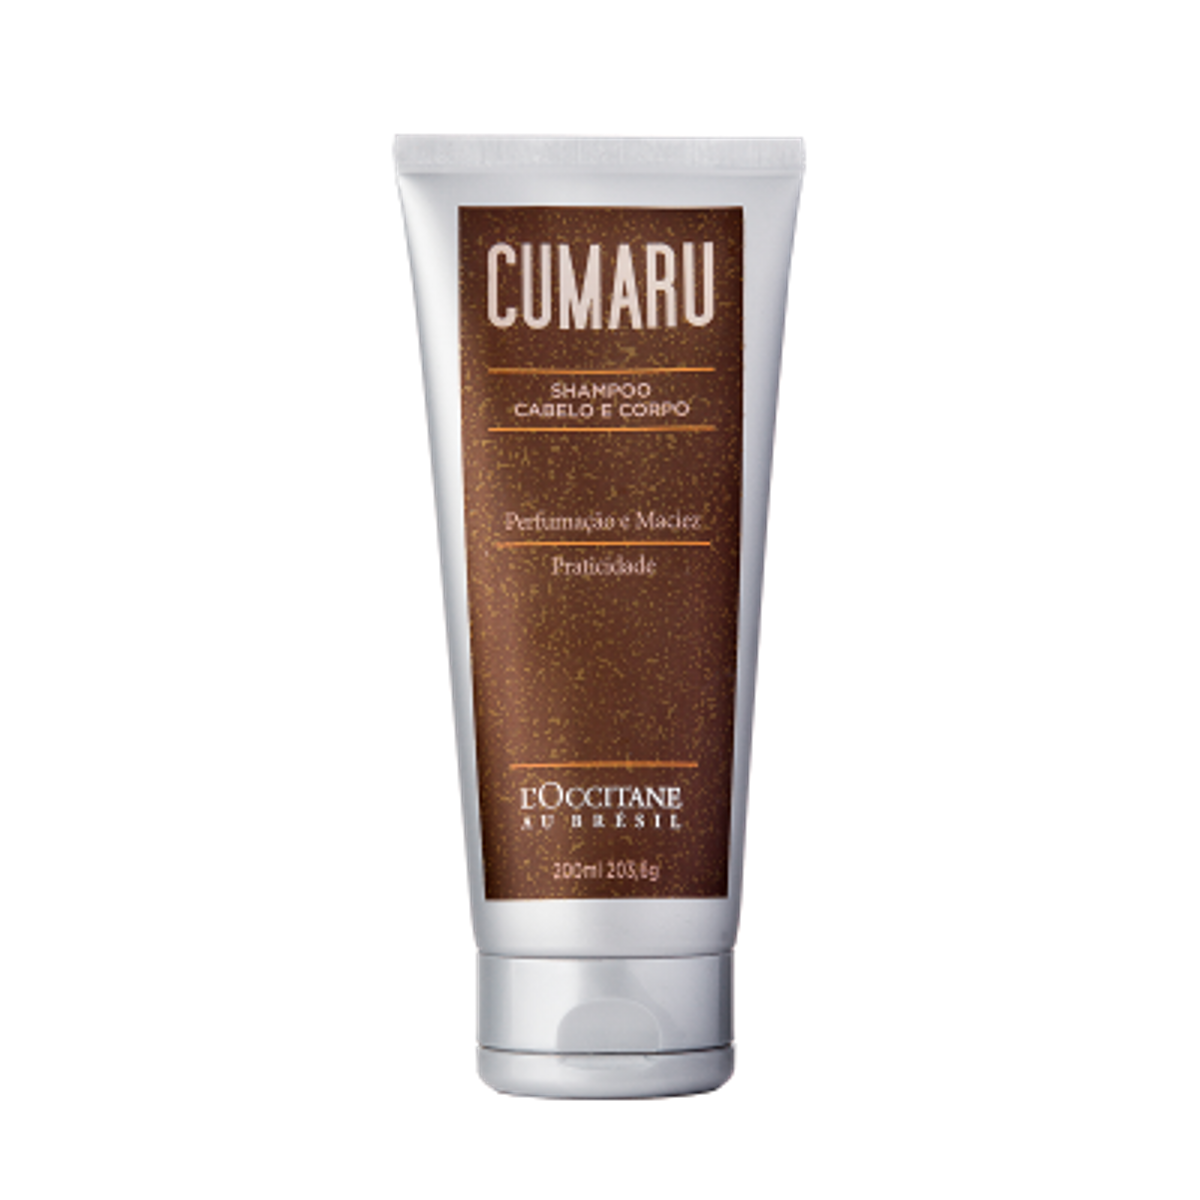 Shampoo Cabelo e Corpo Cumaru , ,  large image number 0